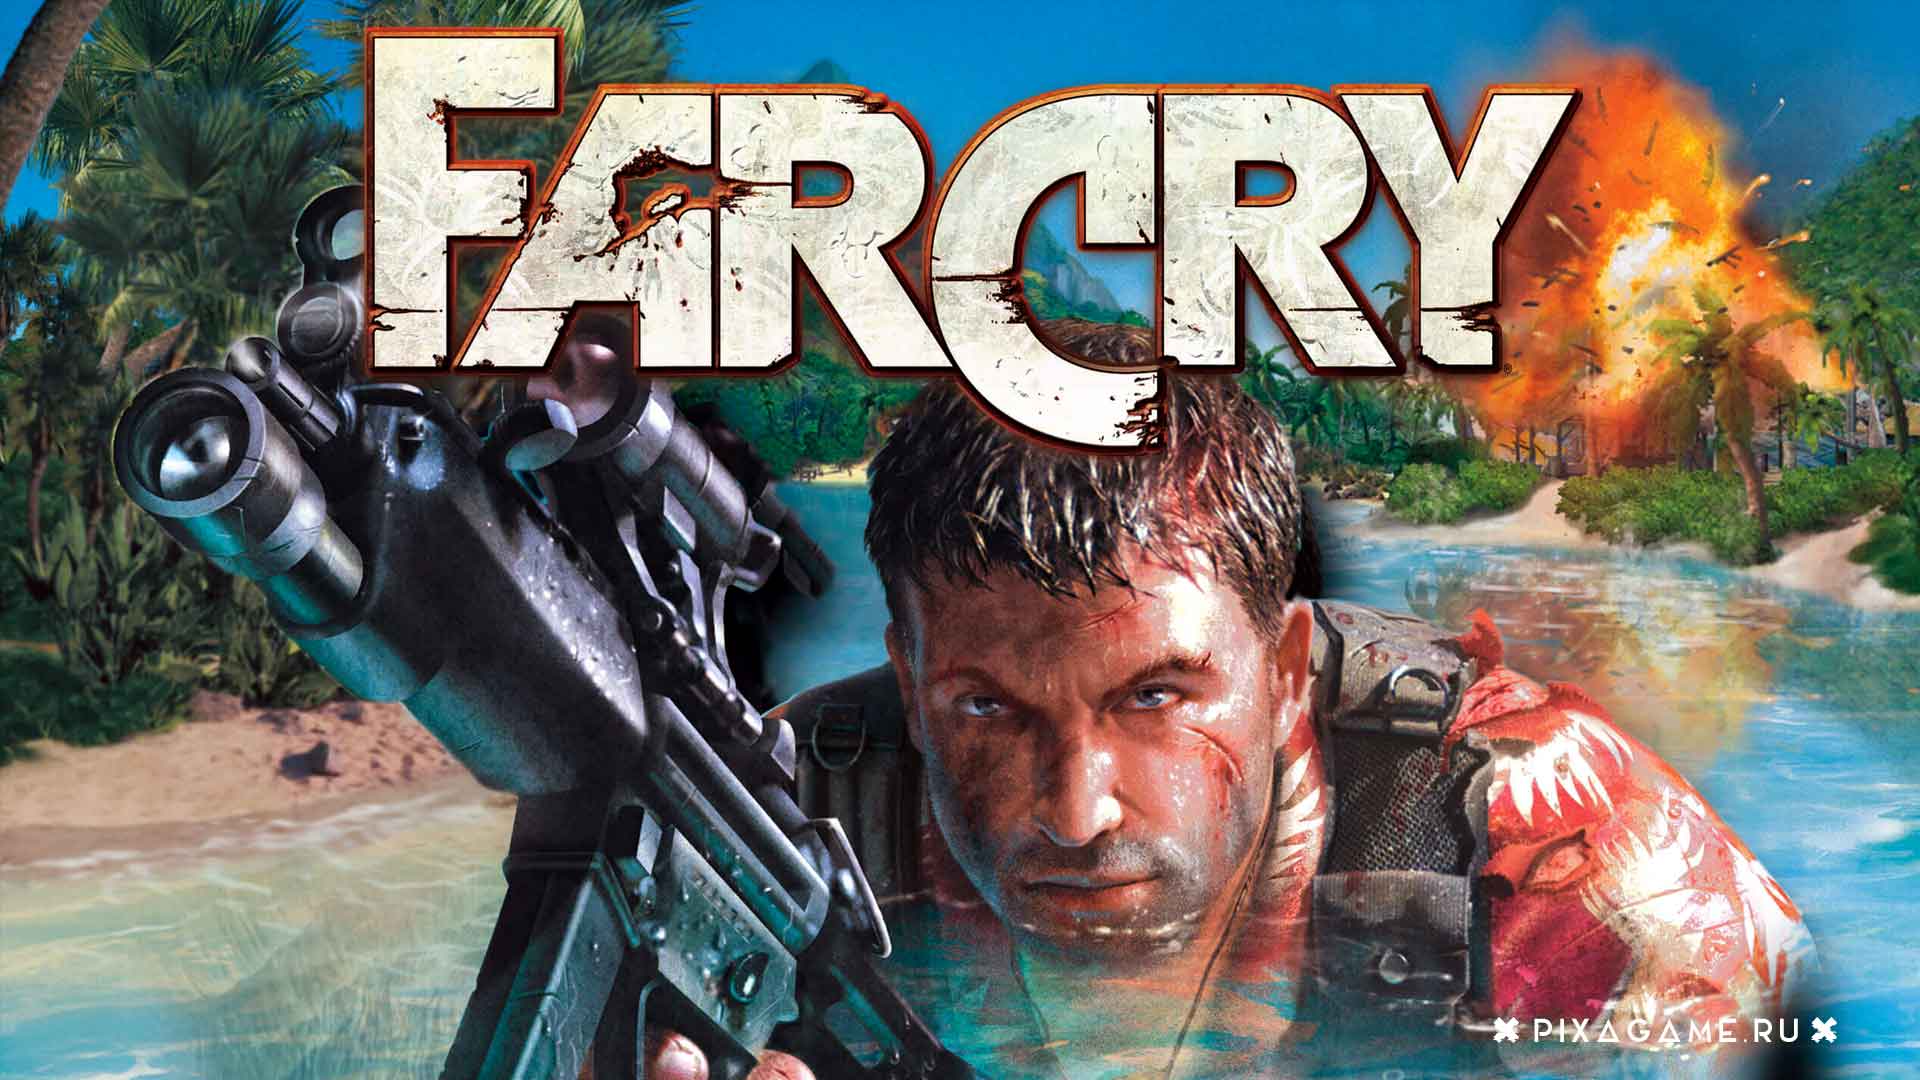 Скачать Far Cry на shvedplay.ru